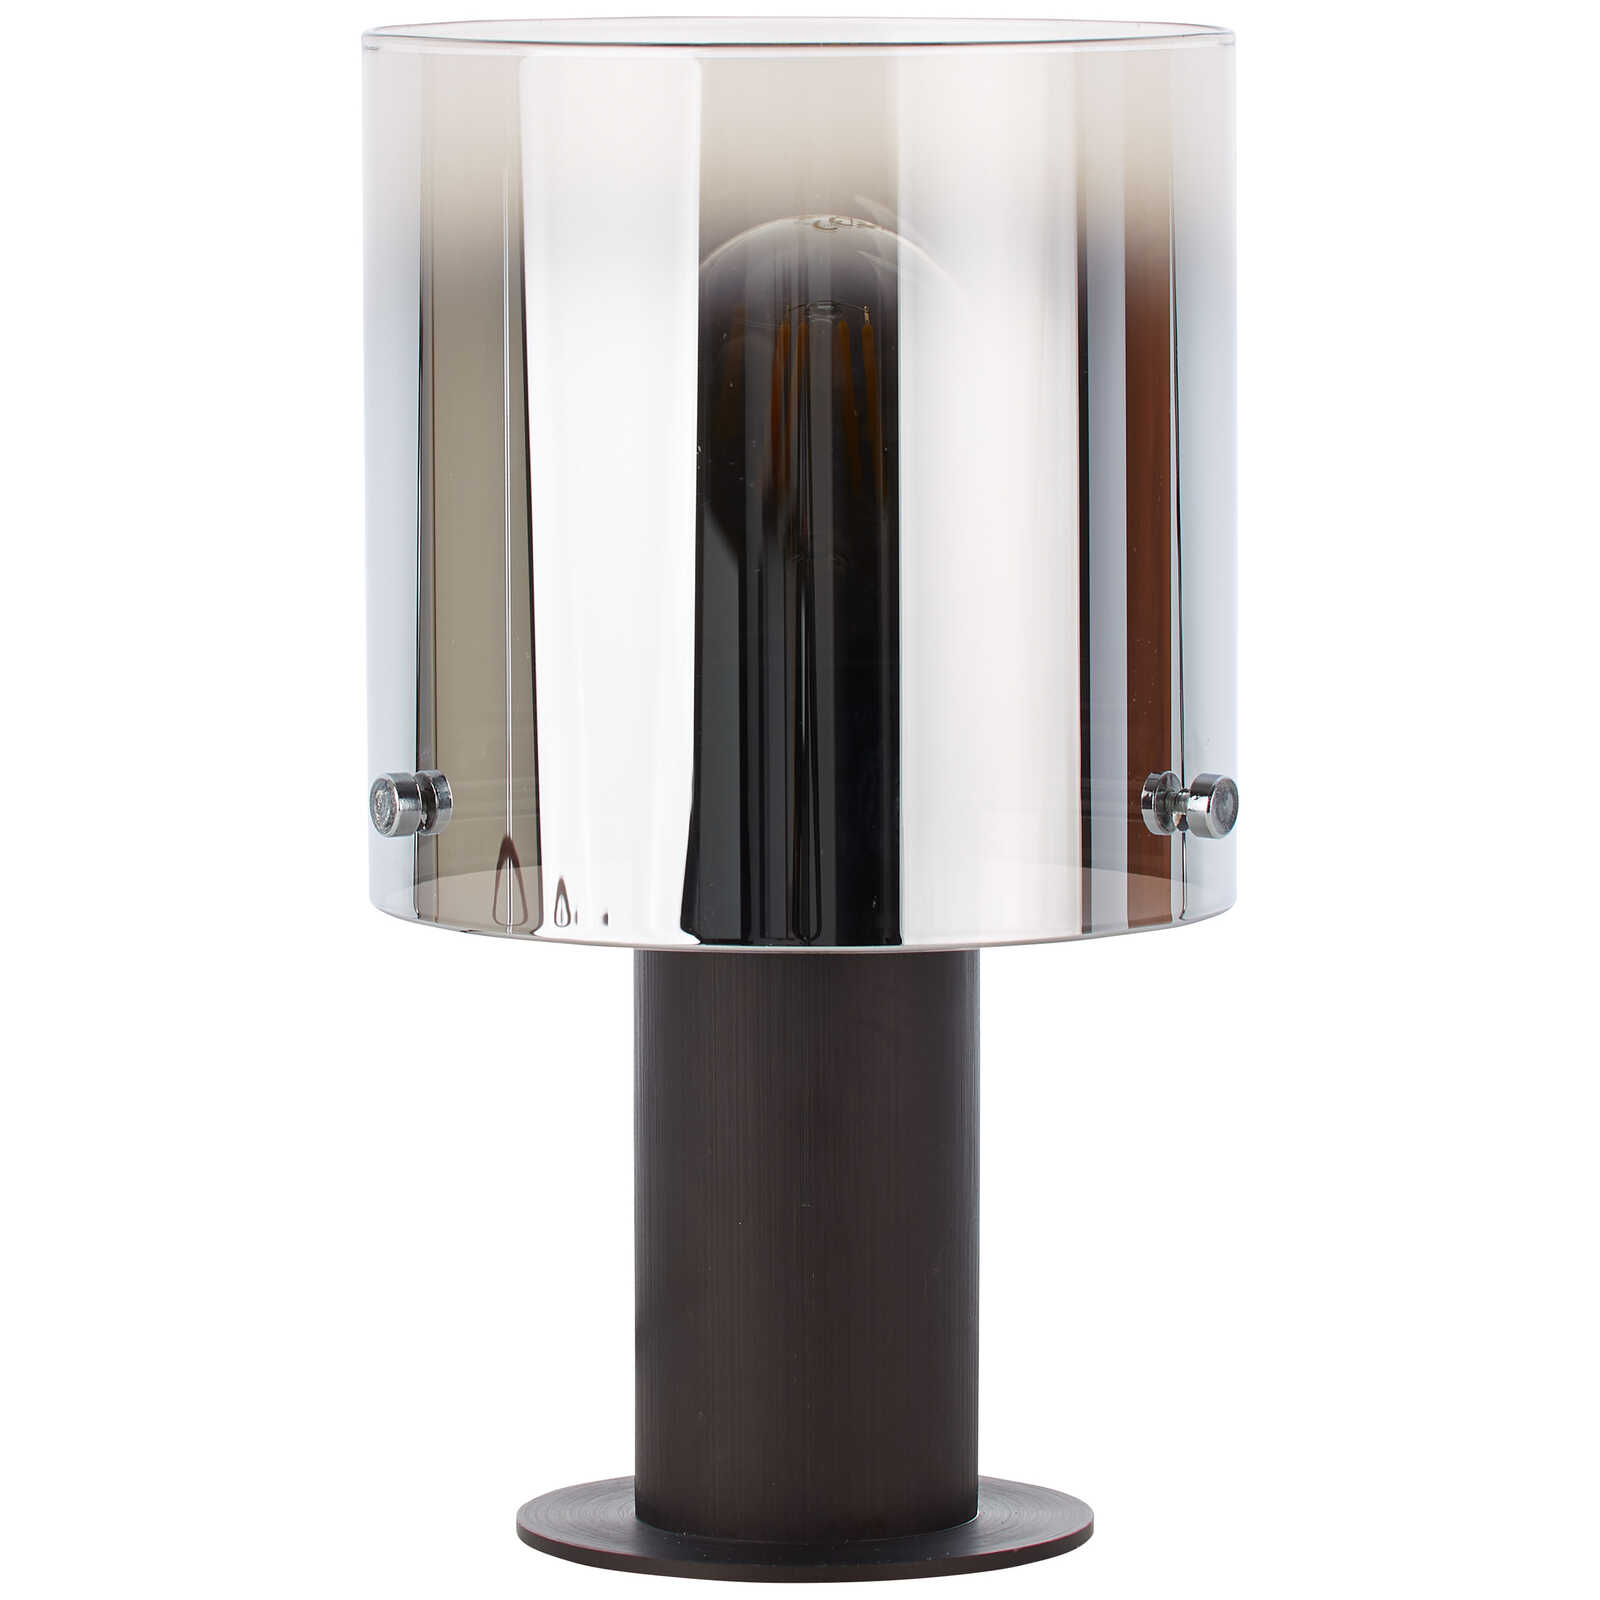             Lampe de table en verre - Benett 1 - Marron
        